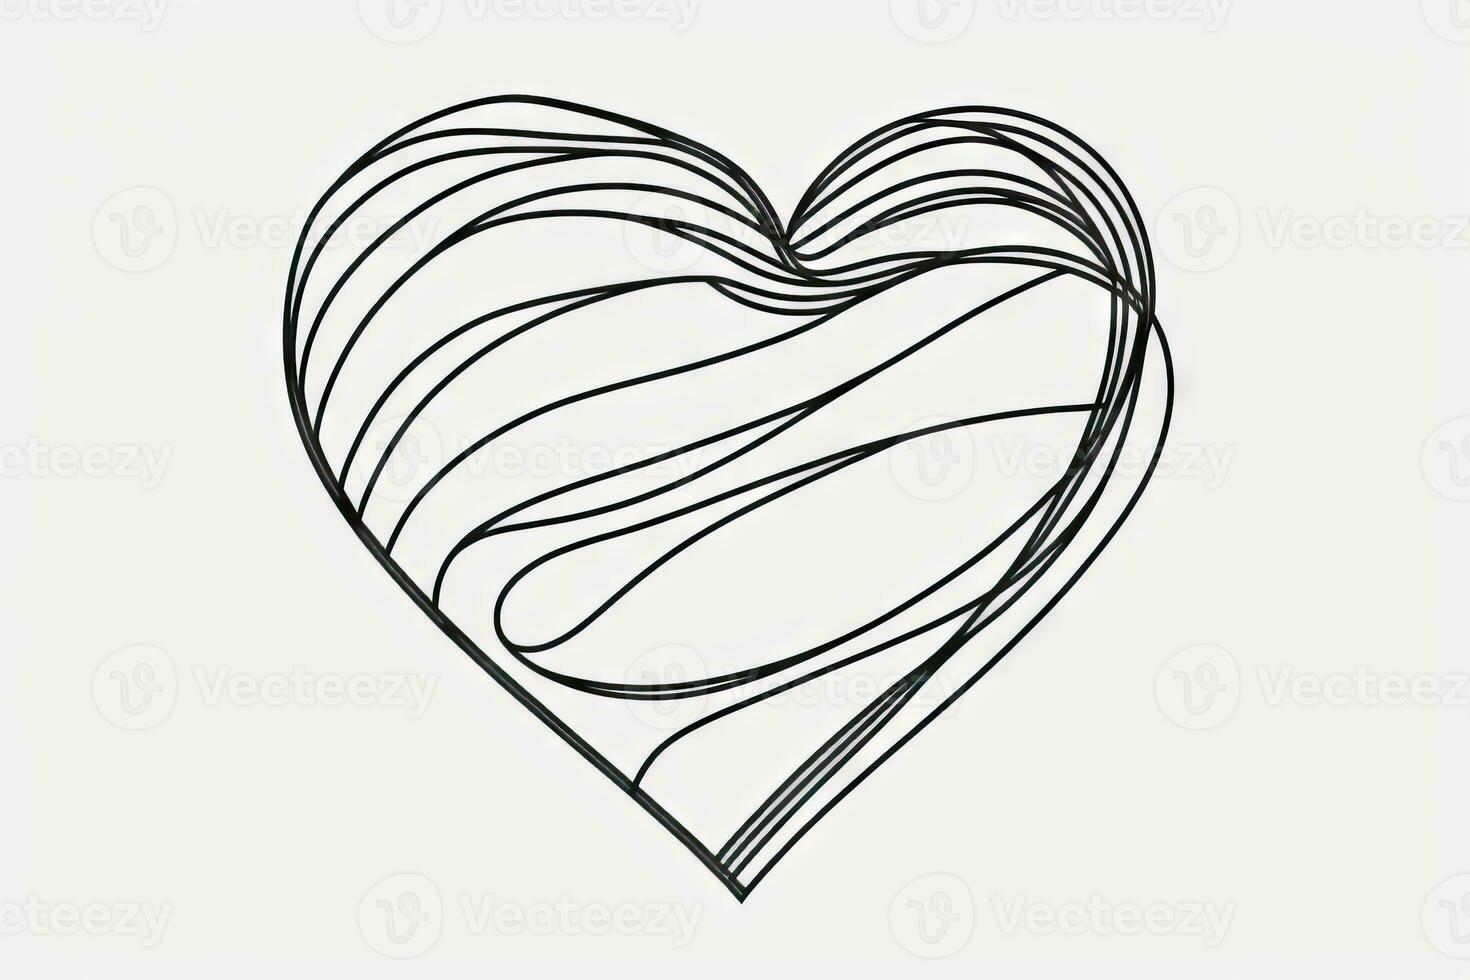 kontinuerlig linje hjärta form på vit bakgrund foto